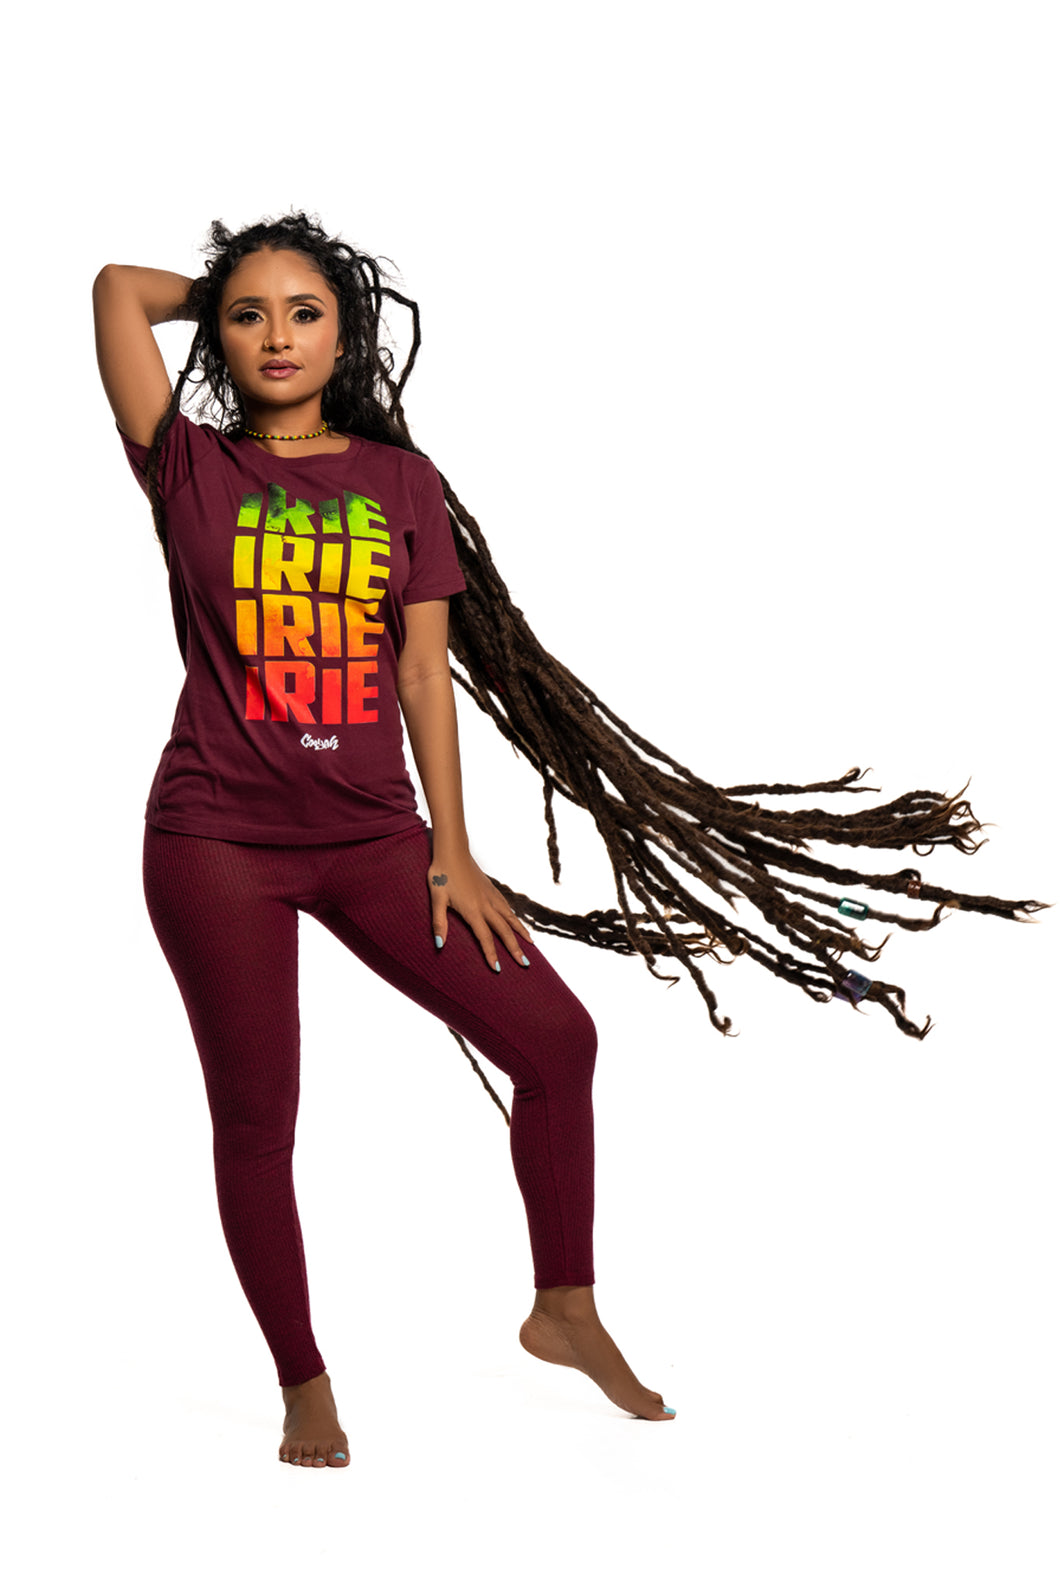 Cooyah Jamaica short sleeve women's Irie Rasta Tee Shirt, Ring Spun, Crew Neck, Jamaican Street Wear Reggae clothing